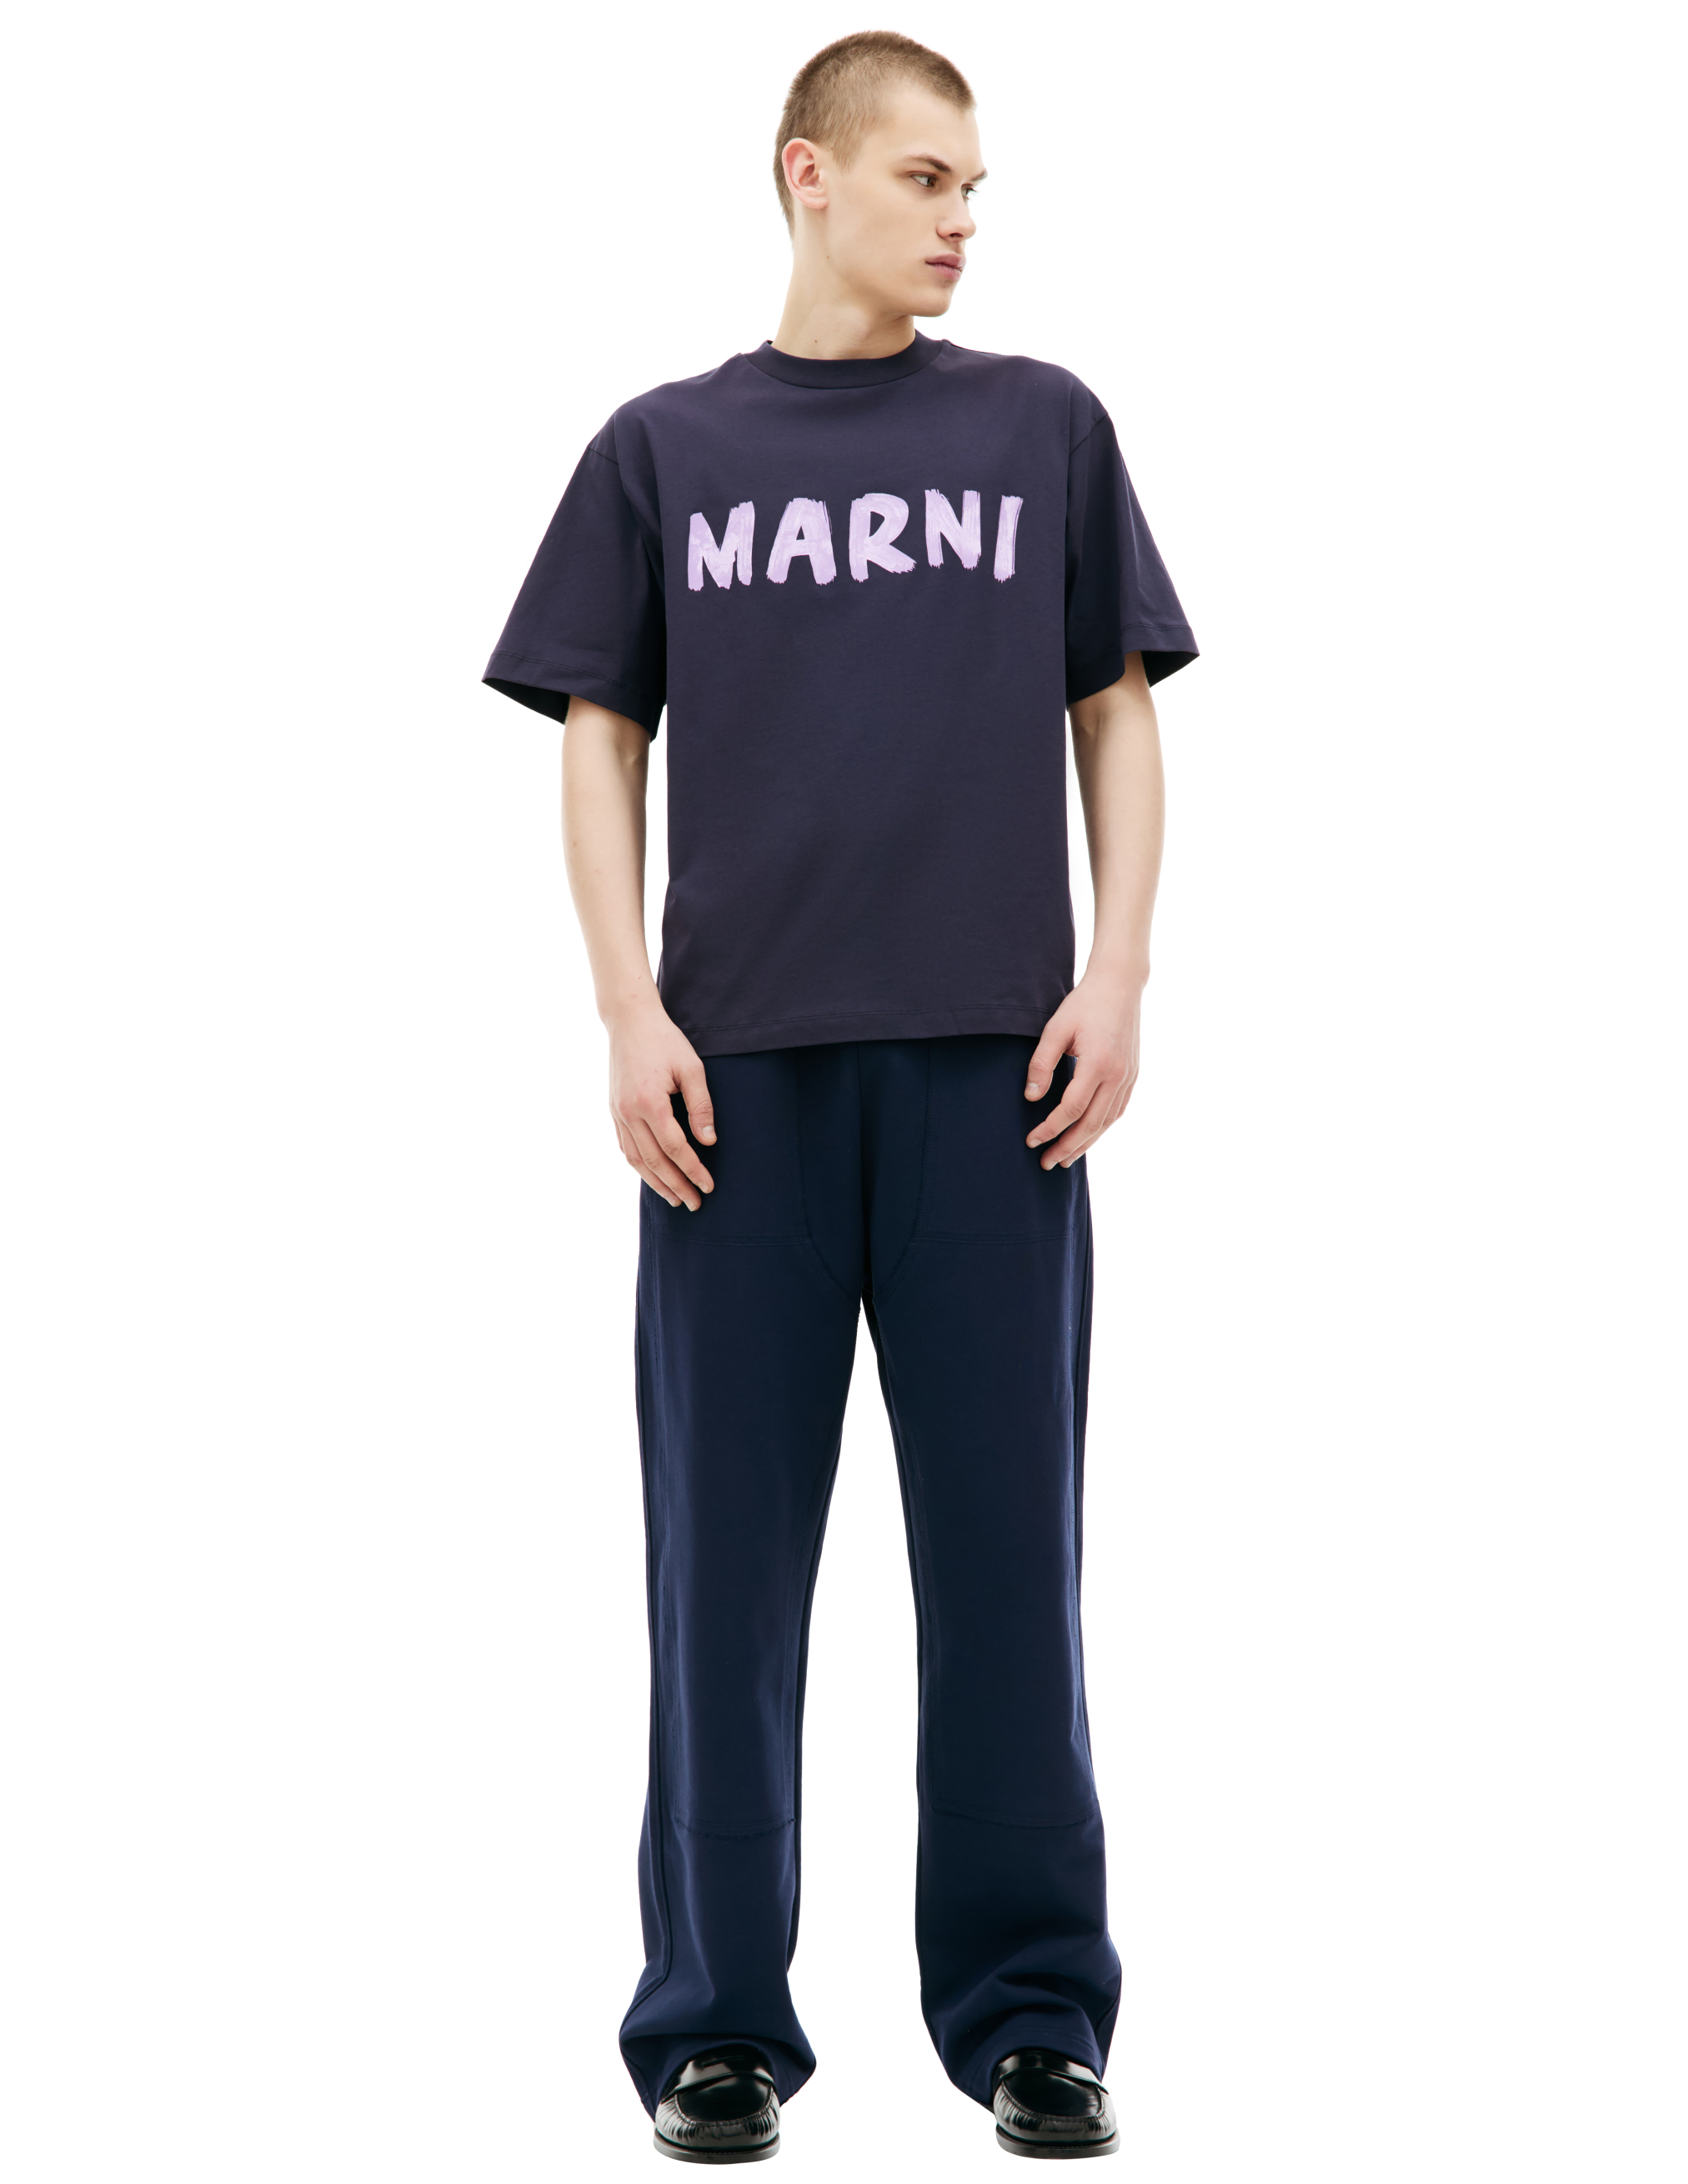 Marni Navy Printed T-shirt In Navy Blue